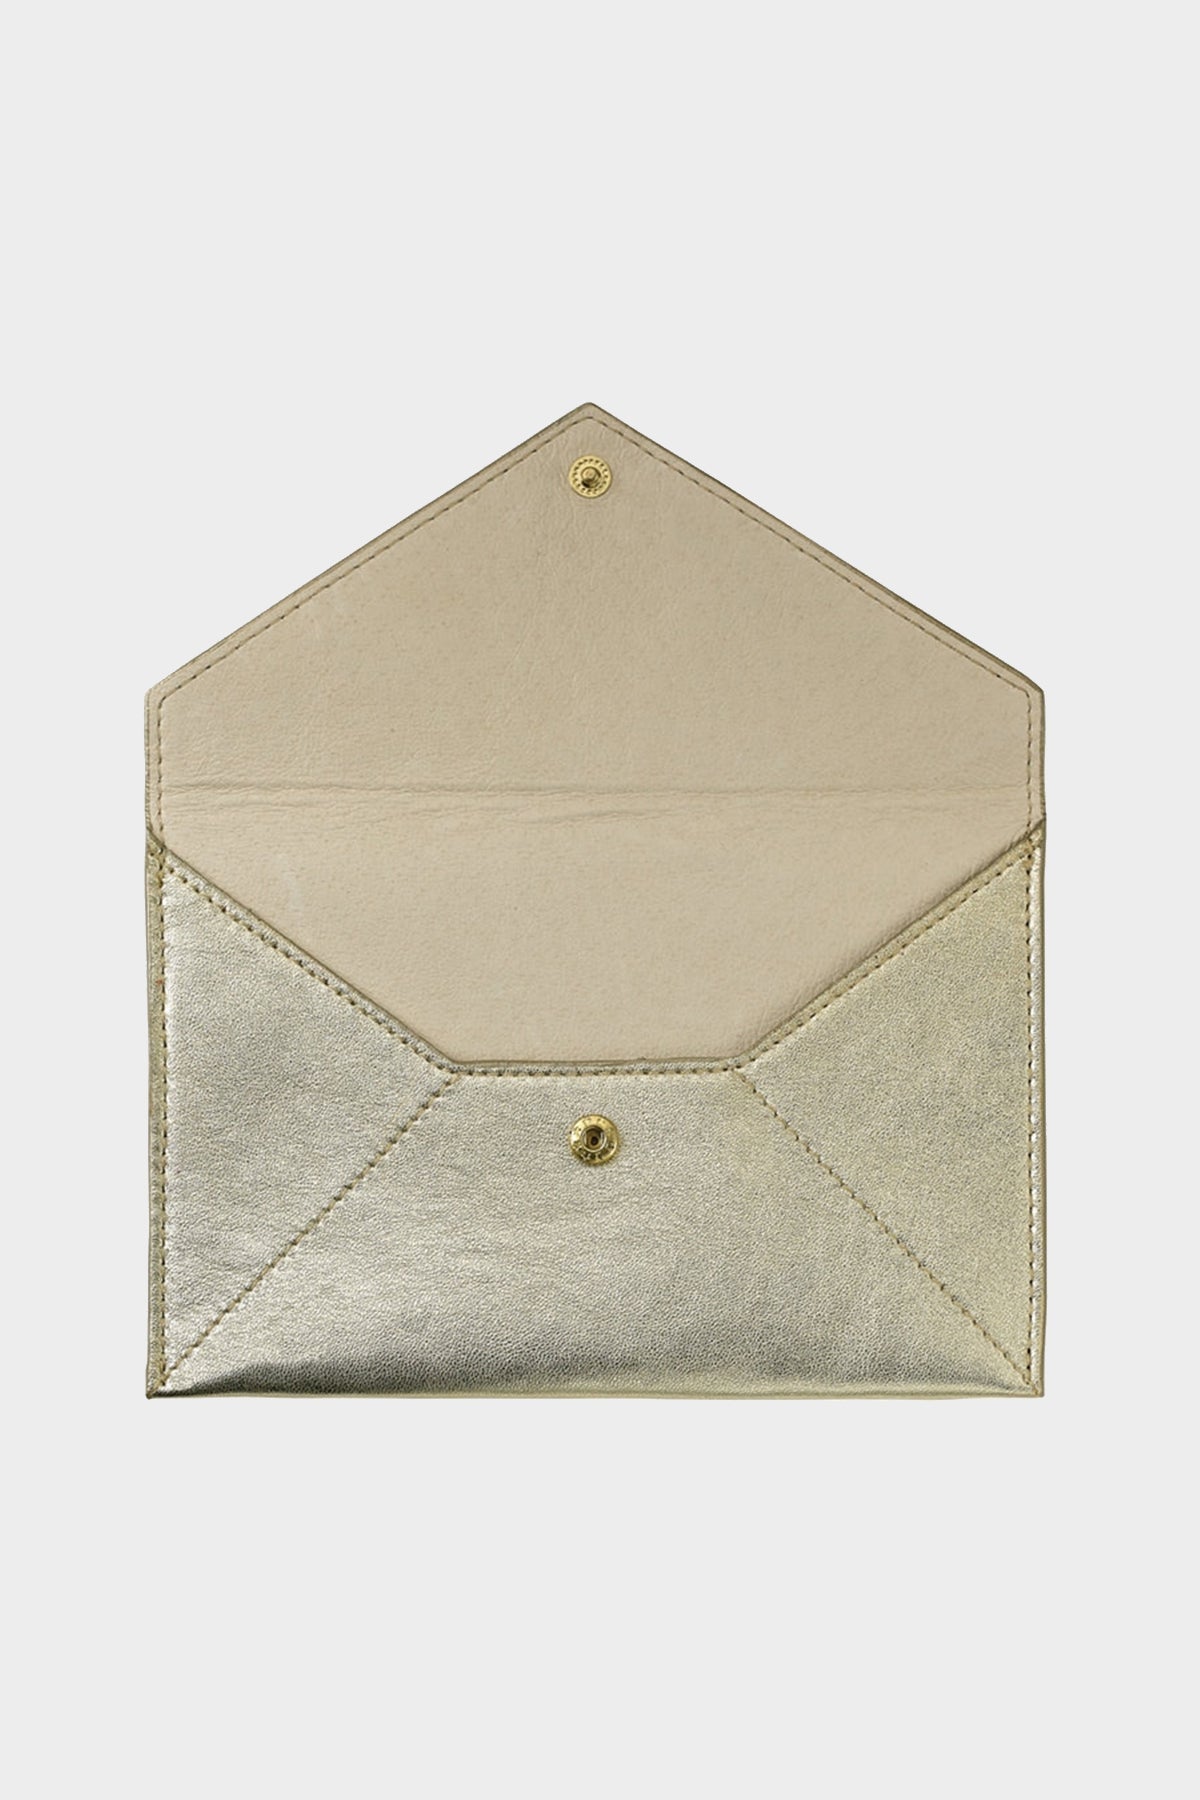 White Gold Metallic Goatskin Medium Envelope - shop-olivia.com